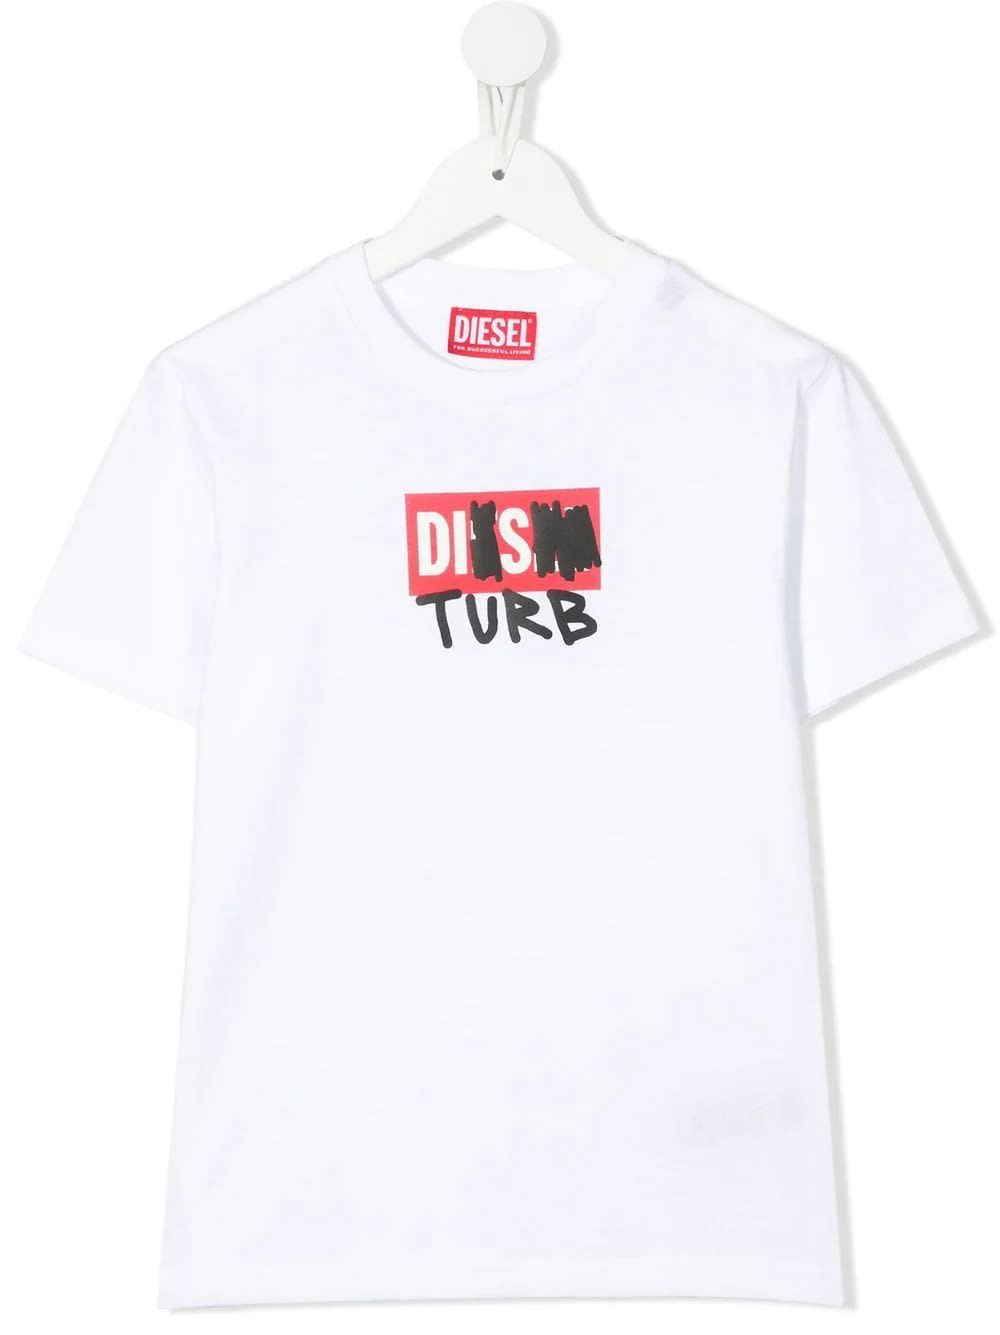 Diesel Kids White T-shirt With Disturb Printed Logo